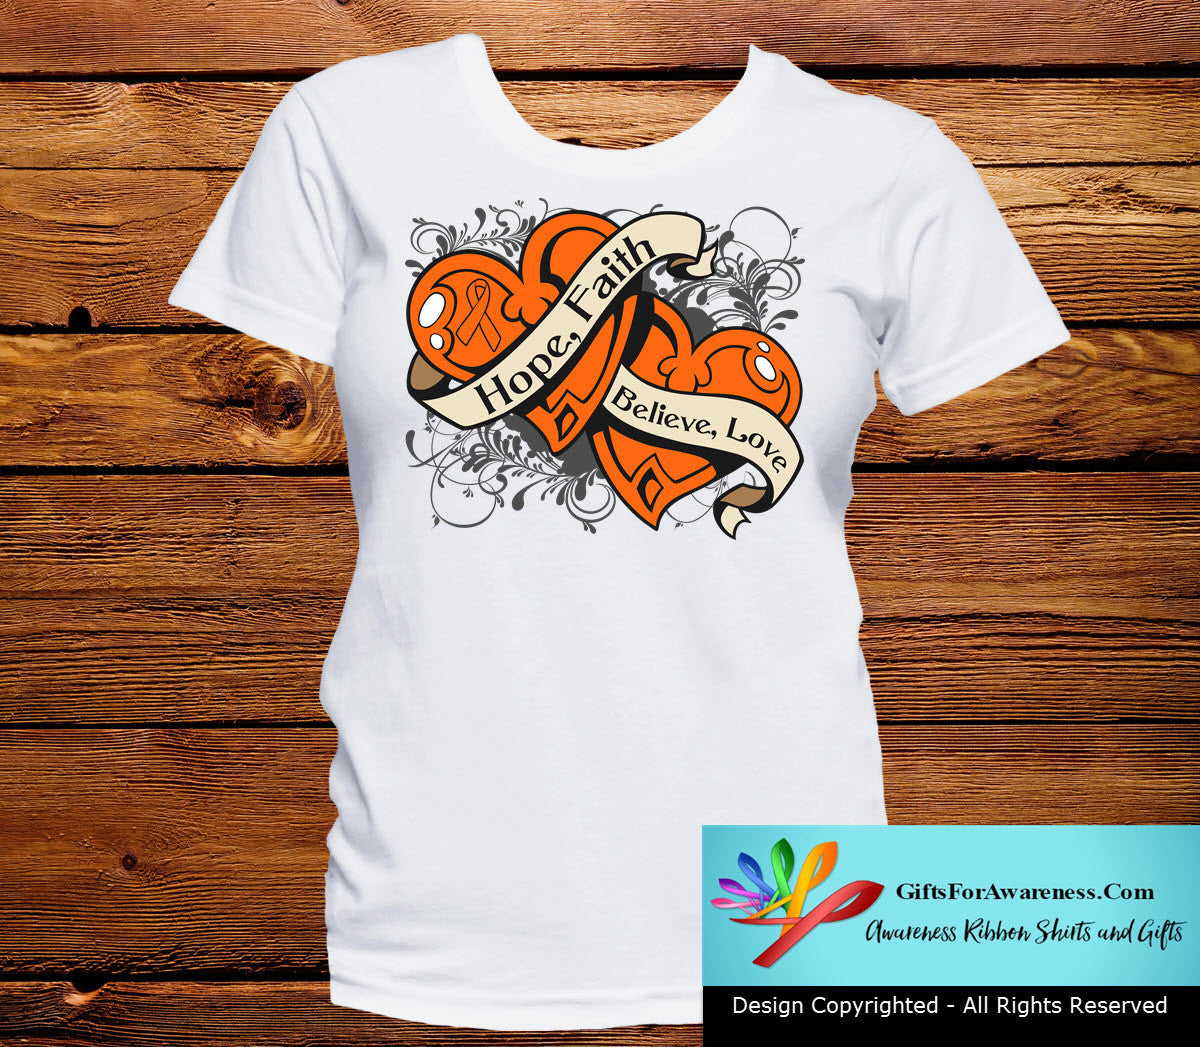 Kidney Cancer Hope Believe Faith Love Shirts - GiftsForAwareness